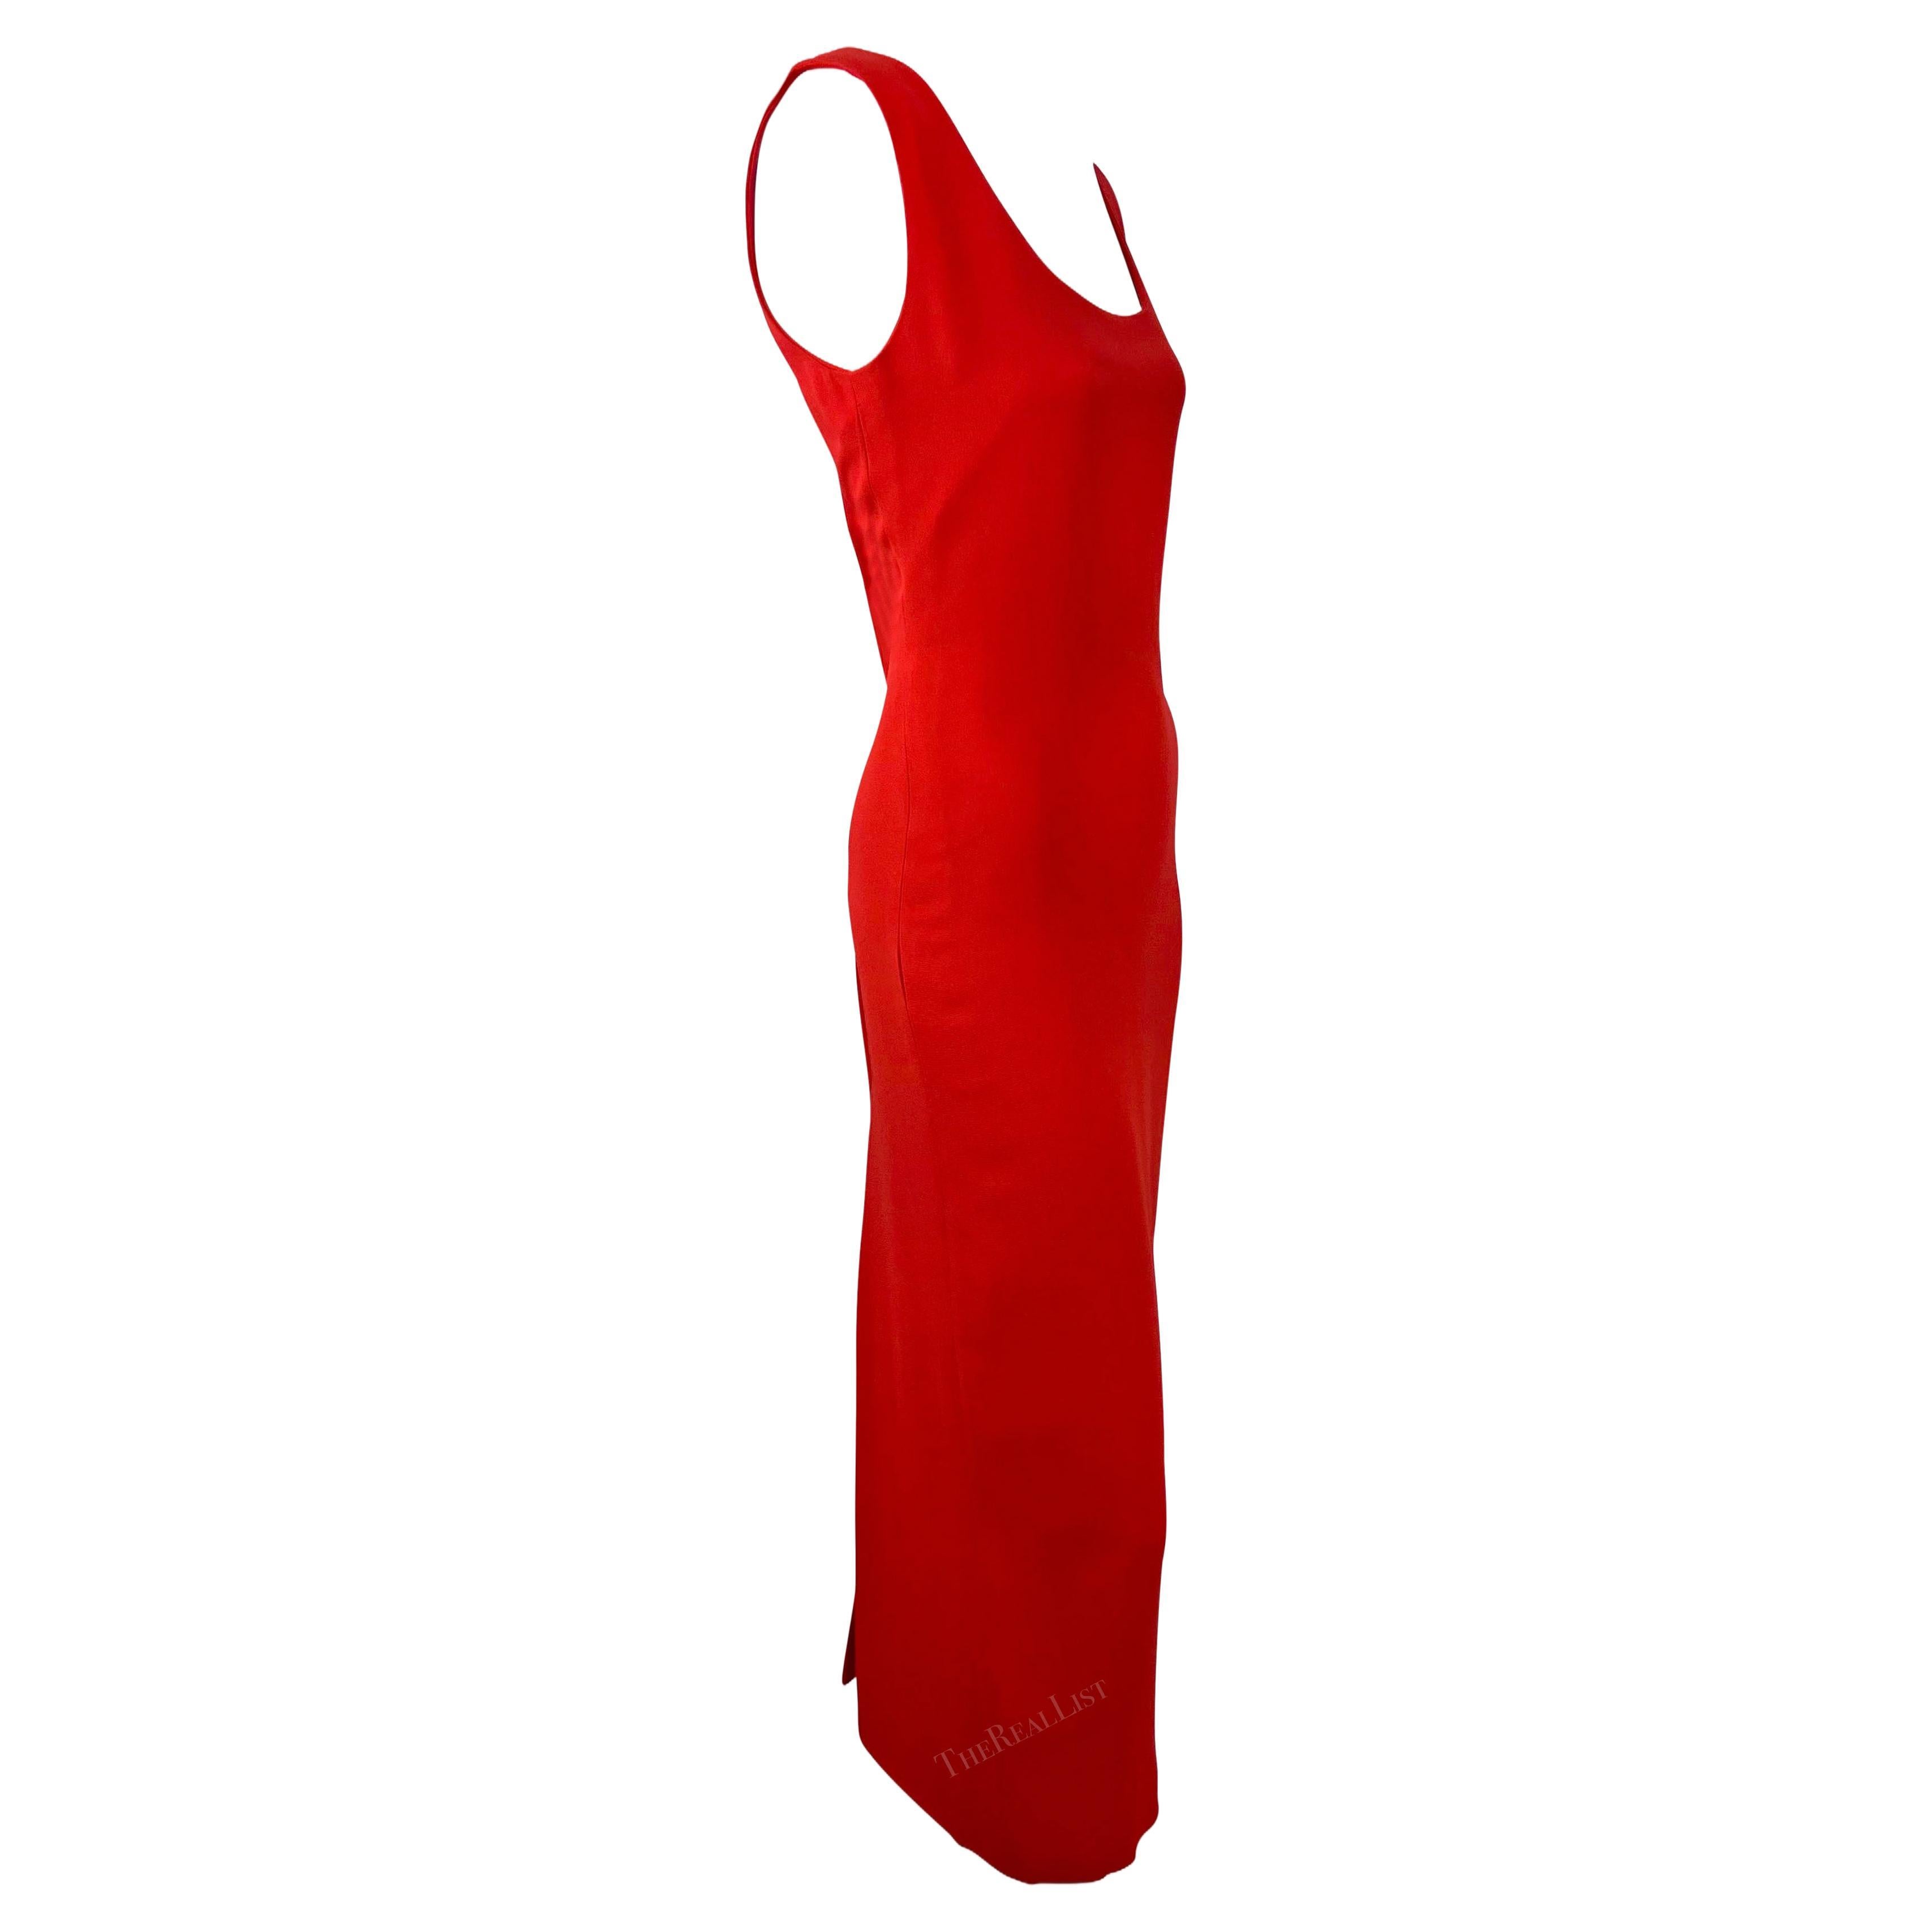 S/S 1993 - Gianni Versace Runway Ad Red - Robe sans manches à dos plongeant en vente 6